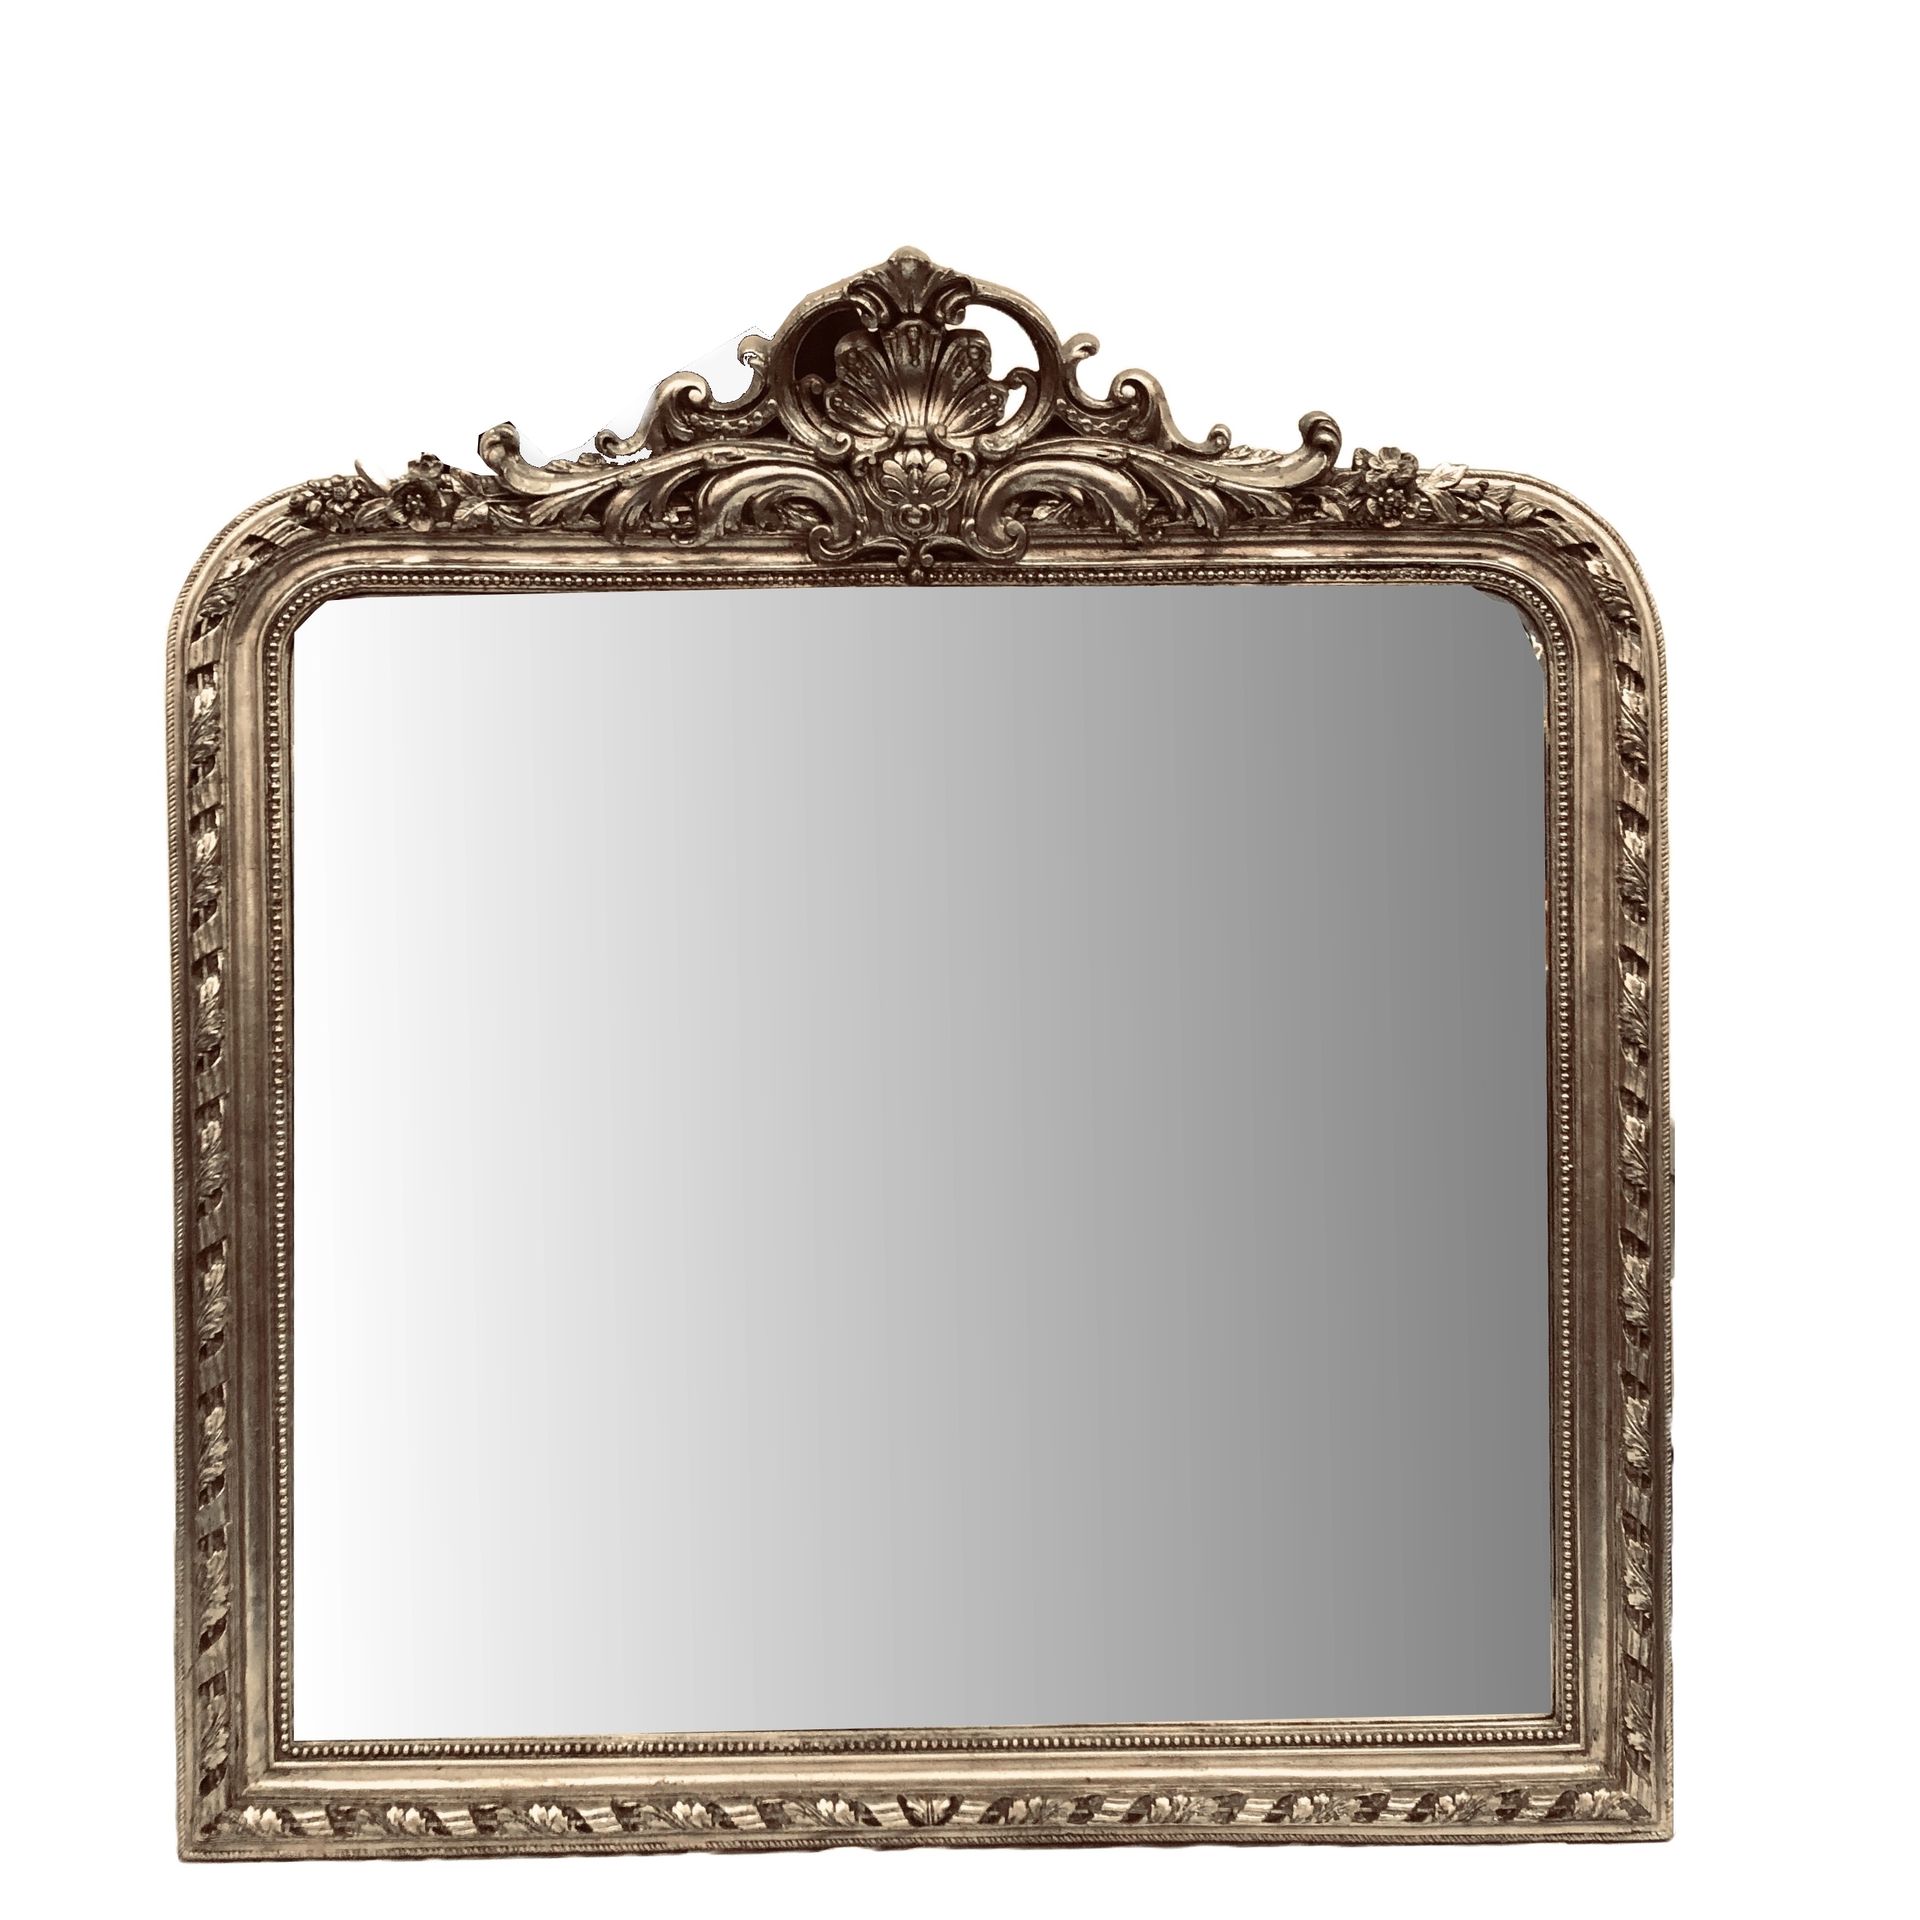 Null Grand miroir, style rocaille, finition argenté. 120X130